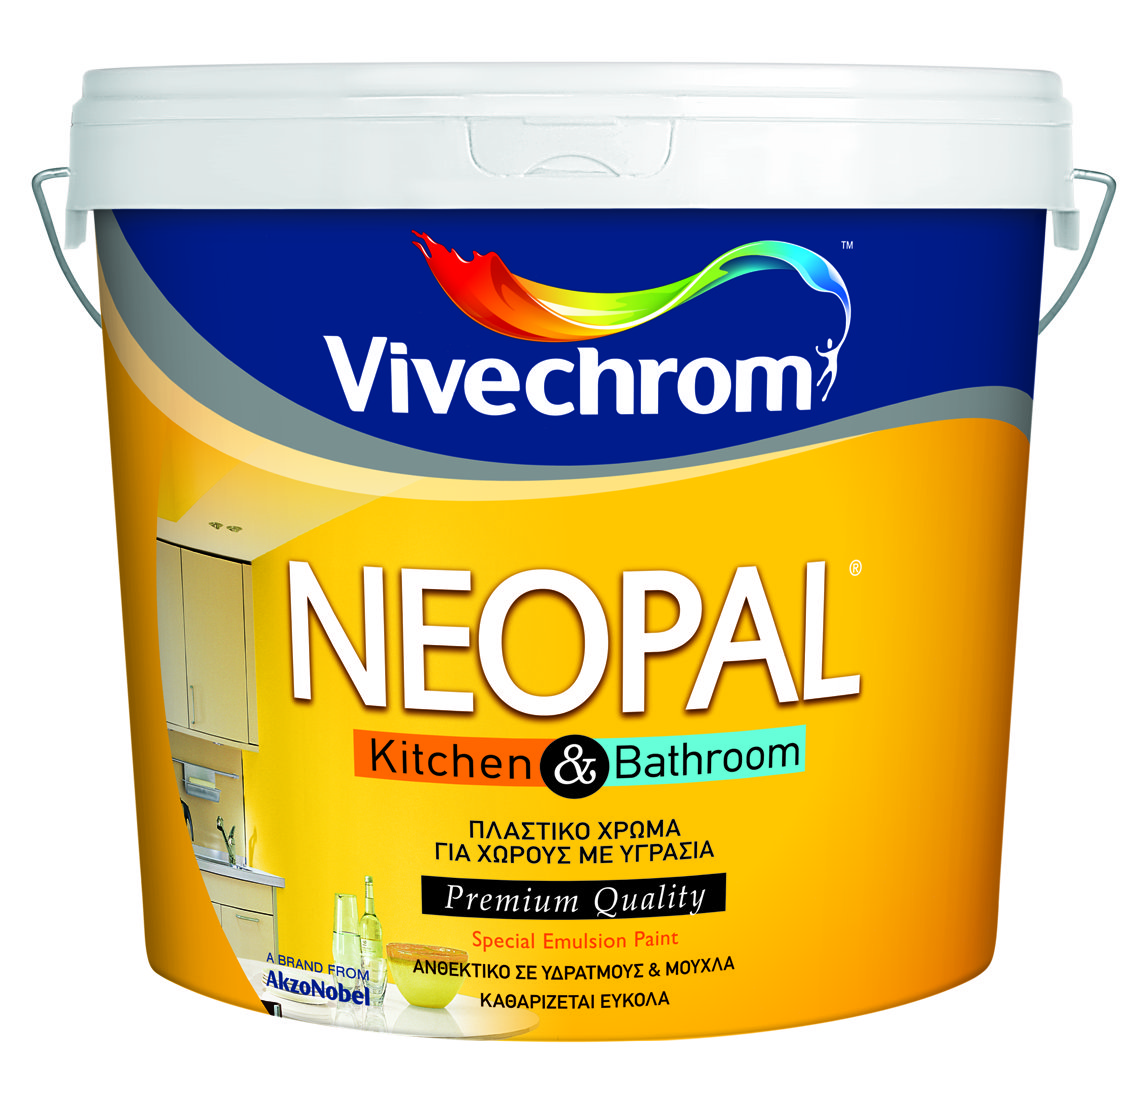 Vivechrom Neopal Kitchen & Bathroom Αντιμικροβιακό Χρώμα για Χώρους με Υγρασία Λευκό 3L